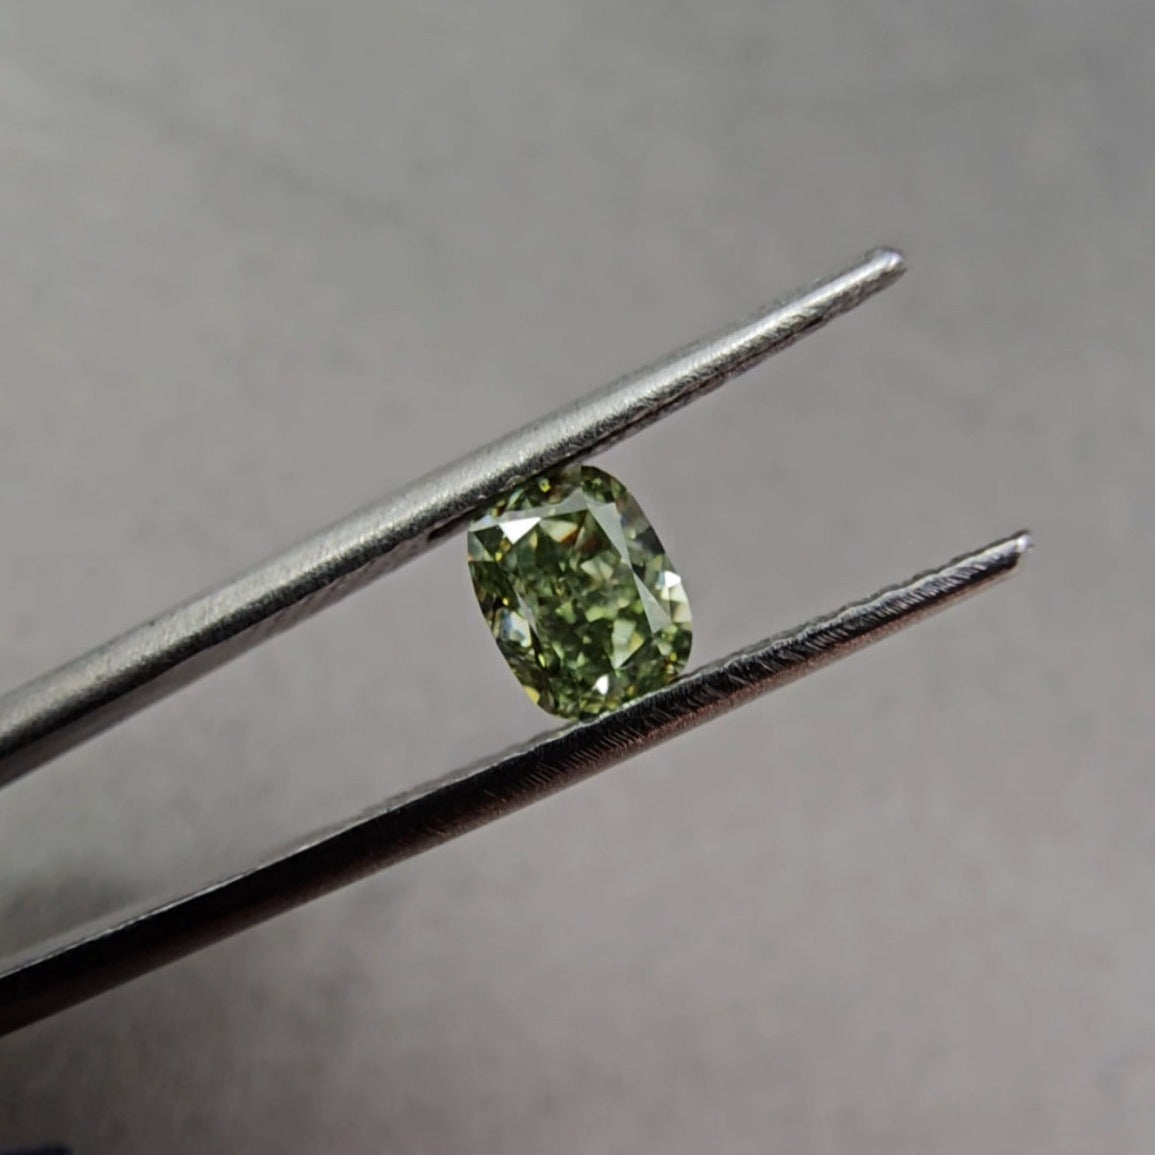 0.66 Carat GIA Fancy Intense Yellowish-Green Cushion Cut Diamond VS2 Clarity Super Saturated Deep Green GIA Certified Diamond